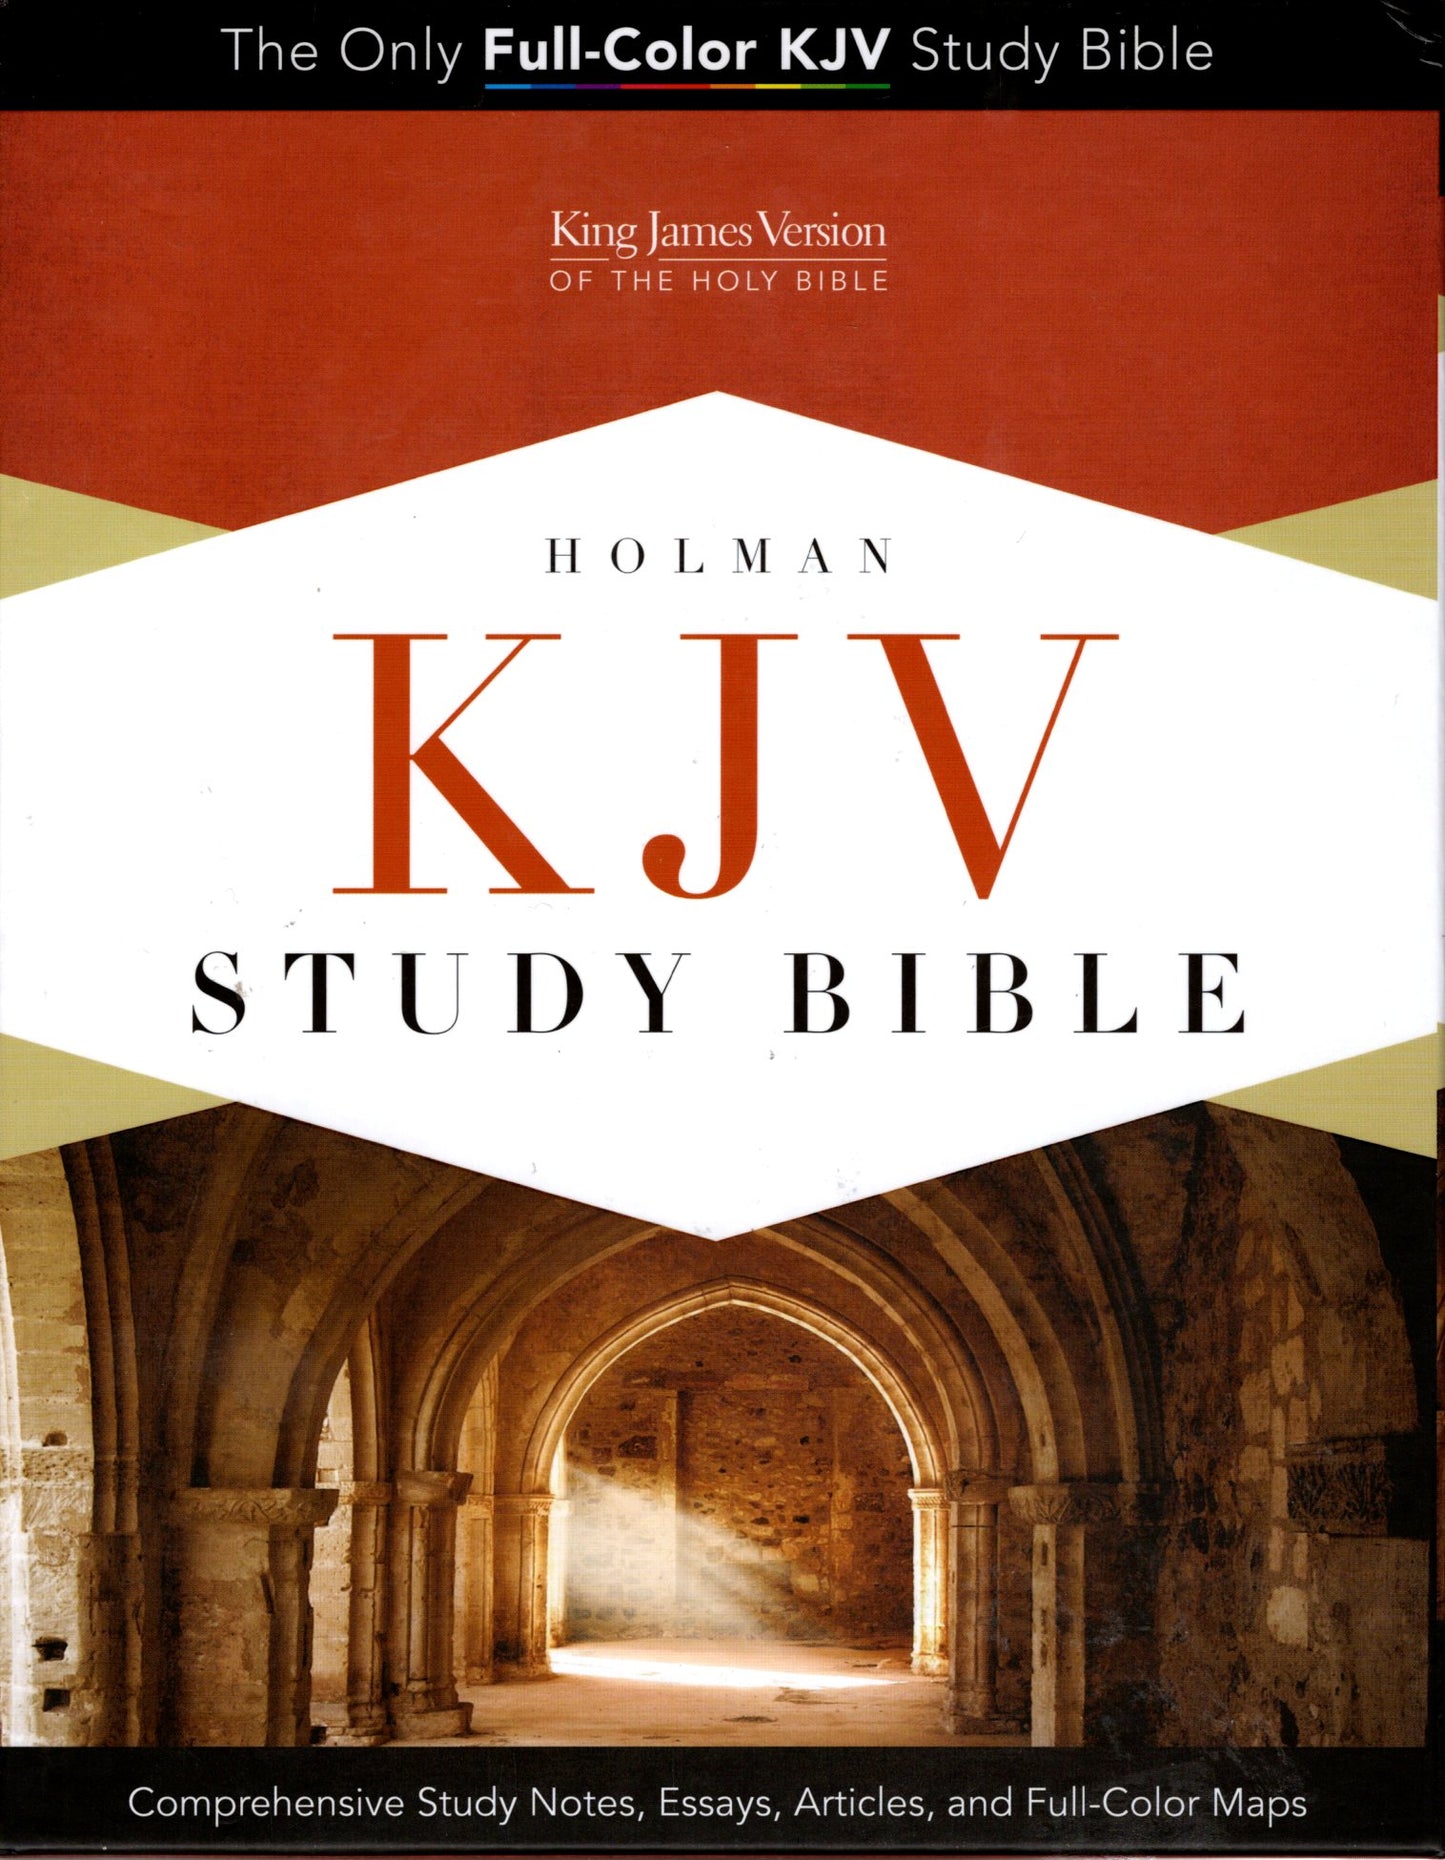 Holman KJV Study Bible - "The Only Full-Color KJV Study Bible" - Hardcover, Cloth over Board (Crimson/Gray)